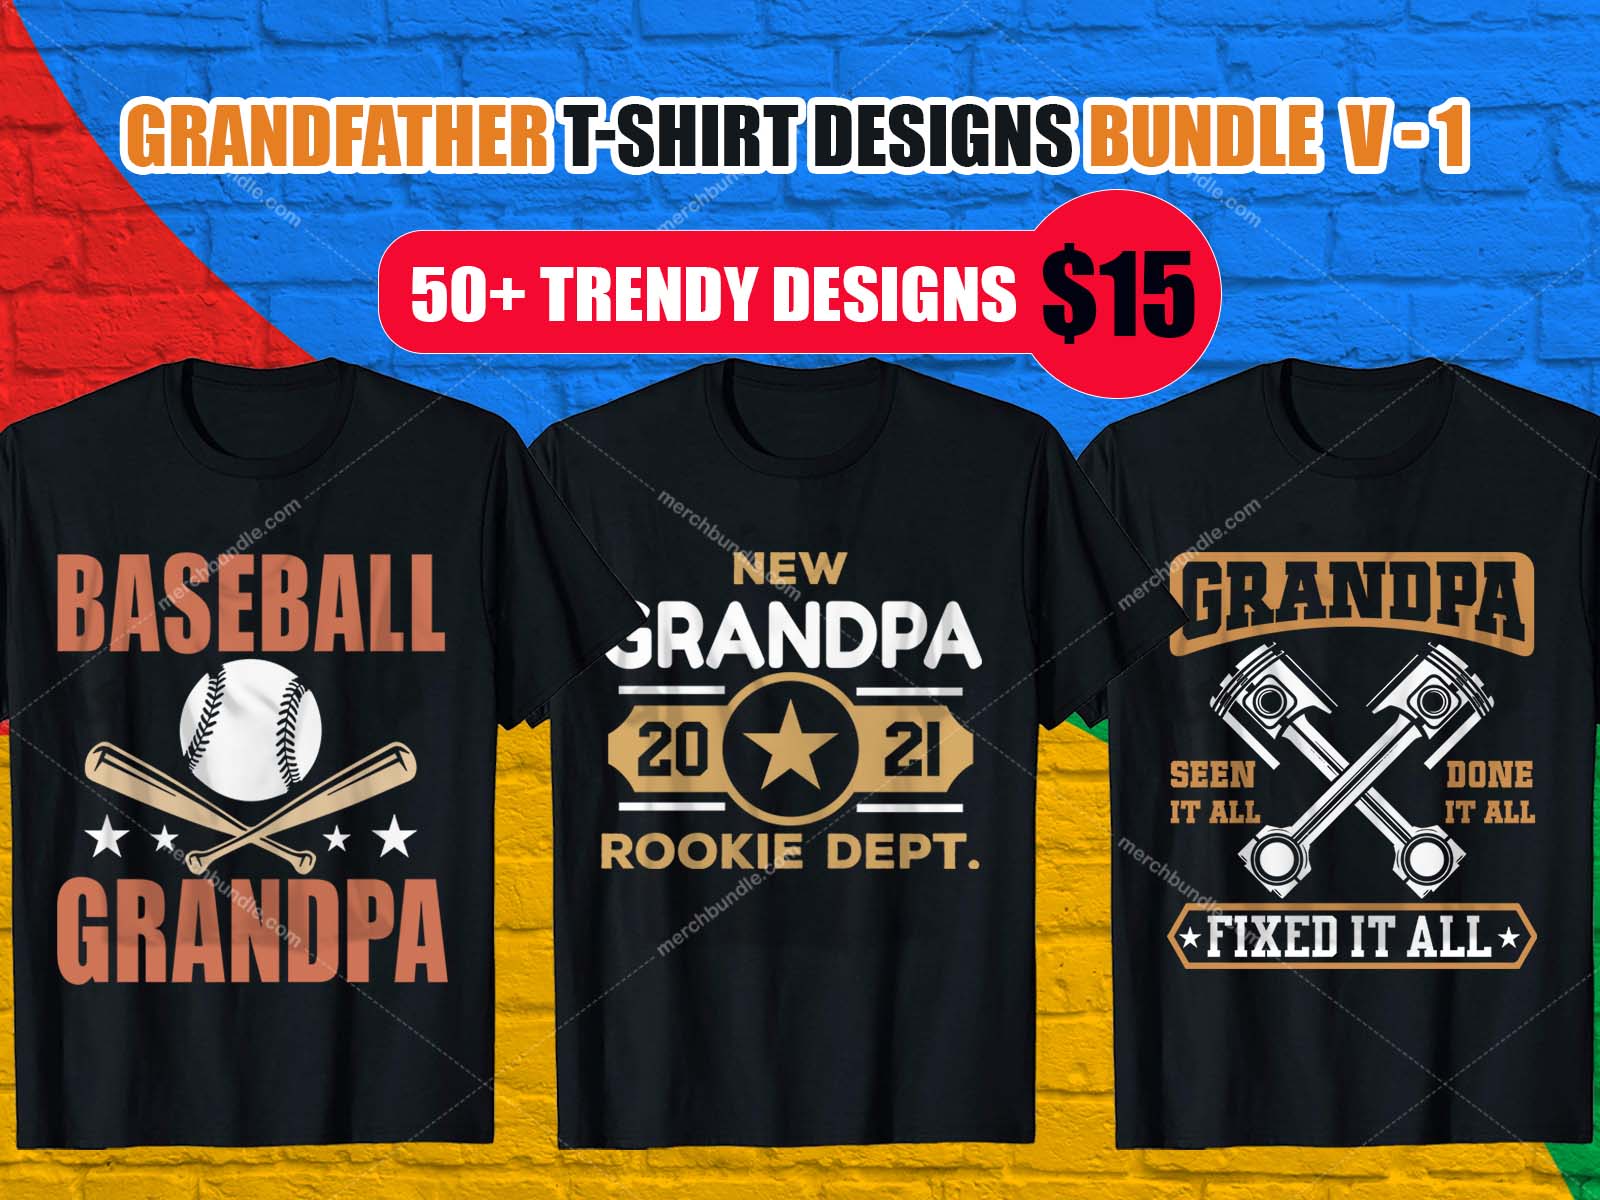 GrandFather Shirt Design Bundle